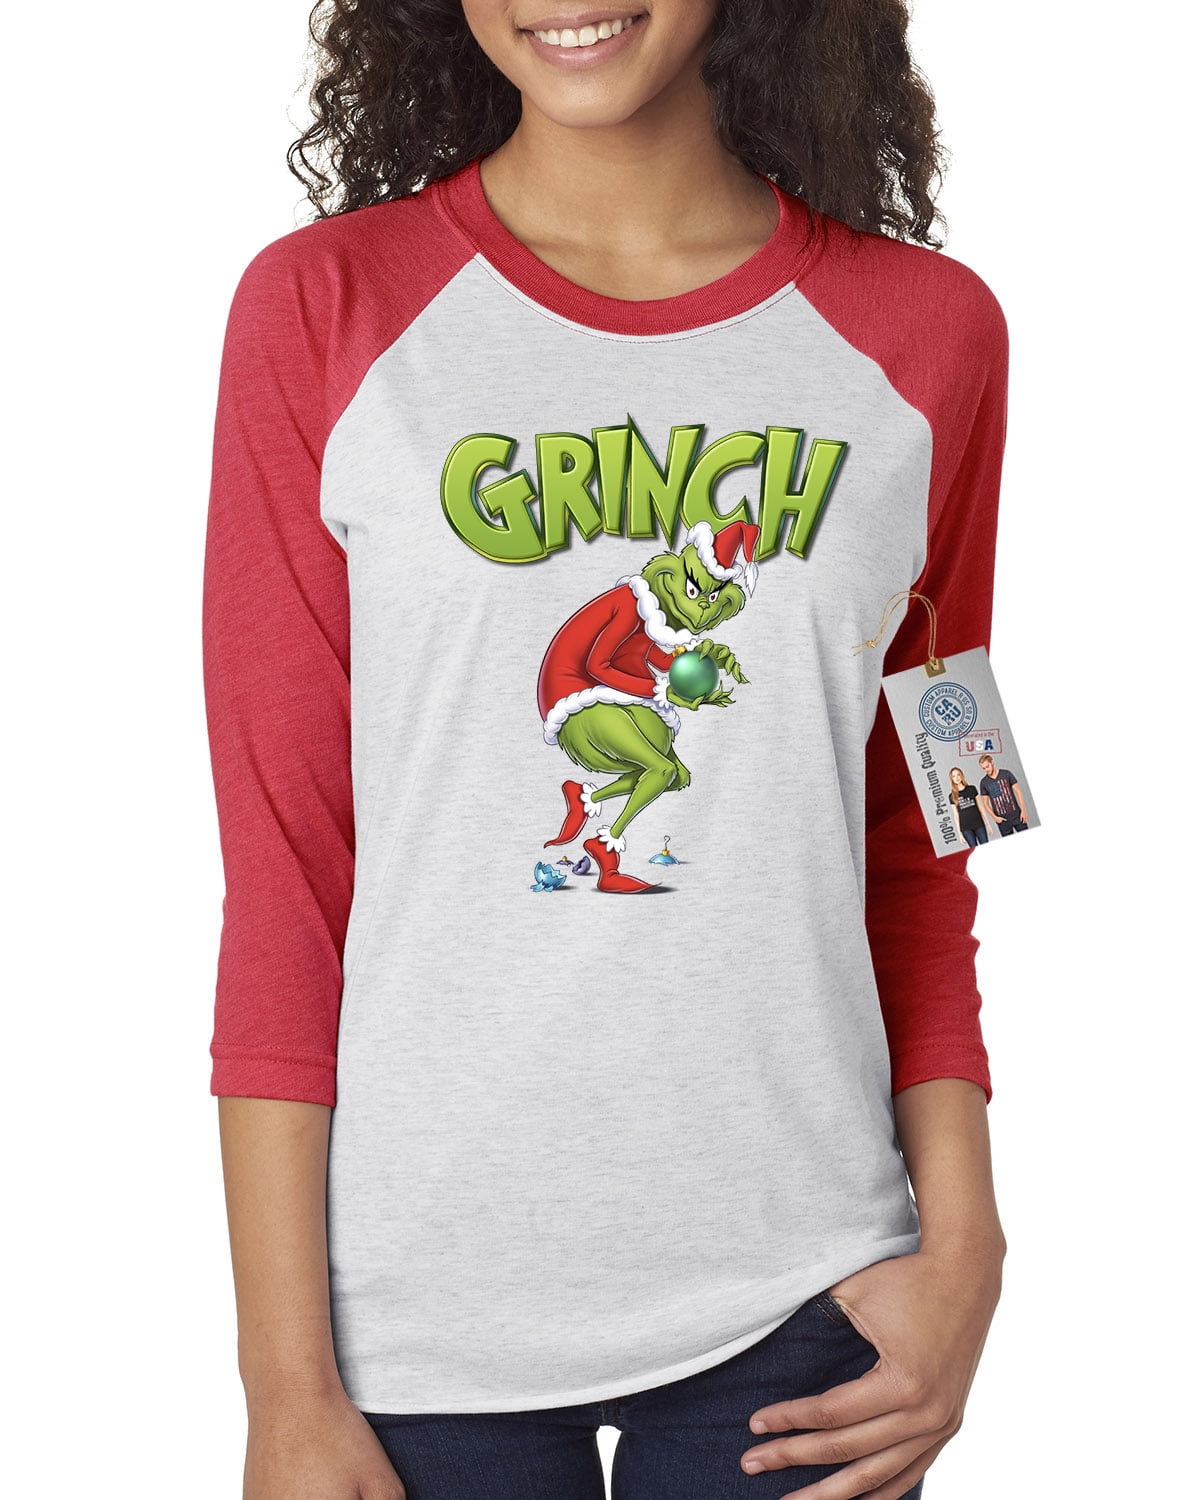 Childs custom Grinch love raglan t shirt